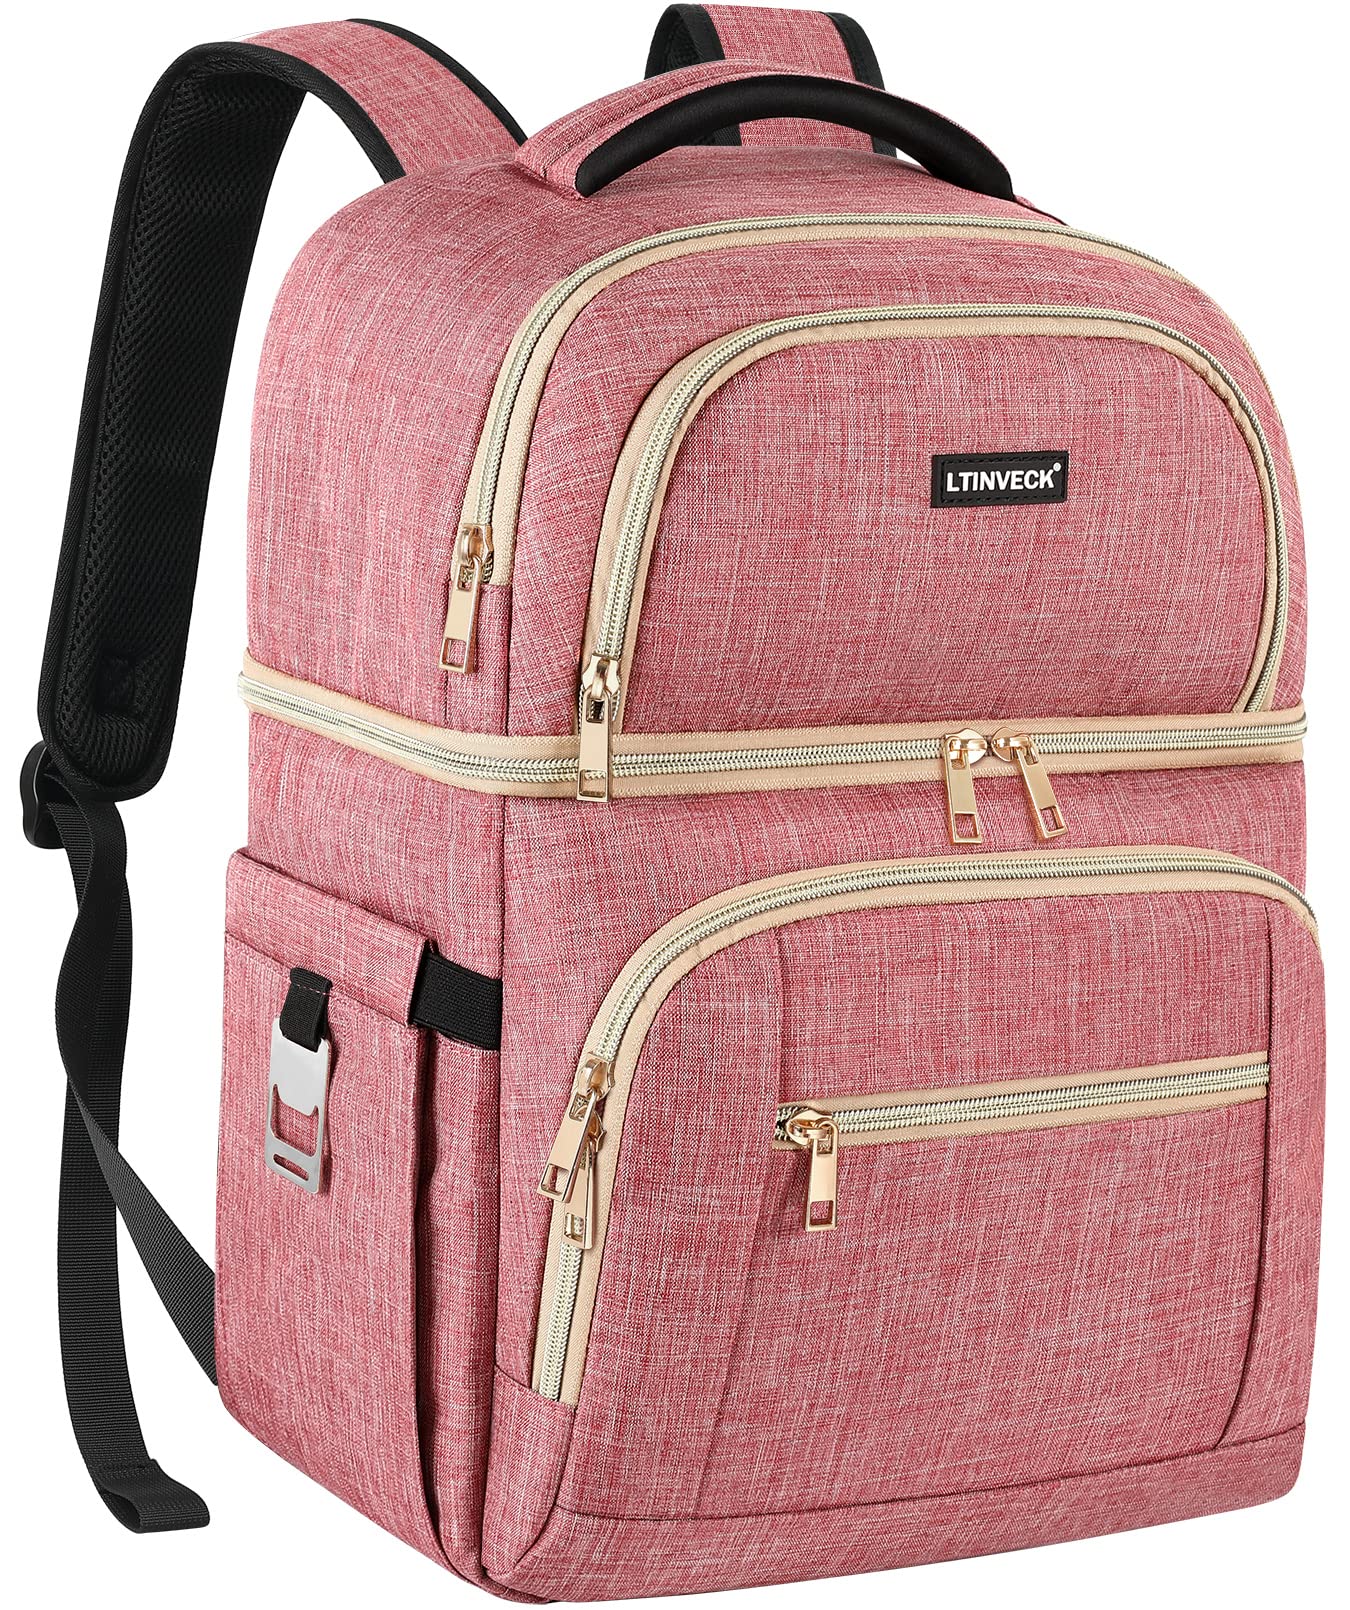 LTINVECK Cooler Backpack,30 Cans Insulated Backpack Cooler Leakproof Double Deck Cooler Bag For Men Women Rfid Lunch Backpack